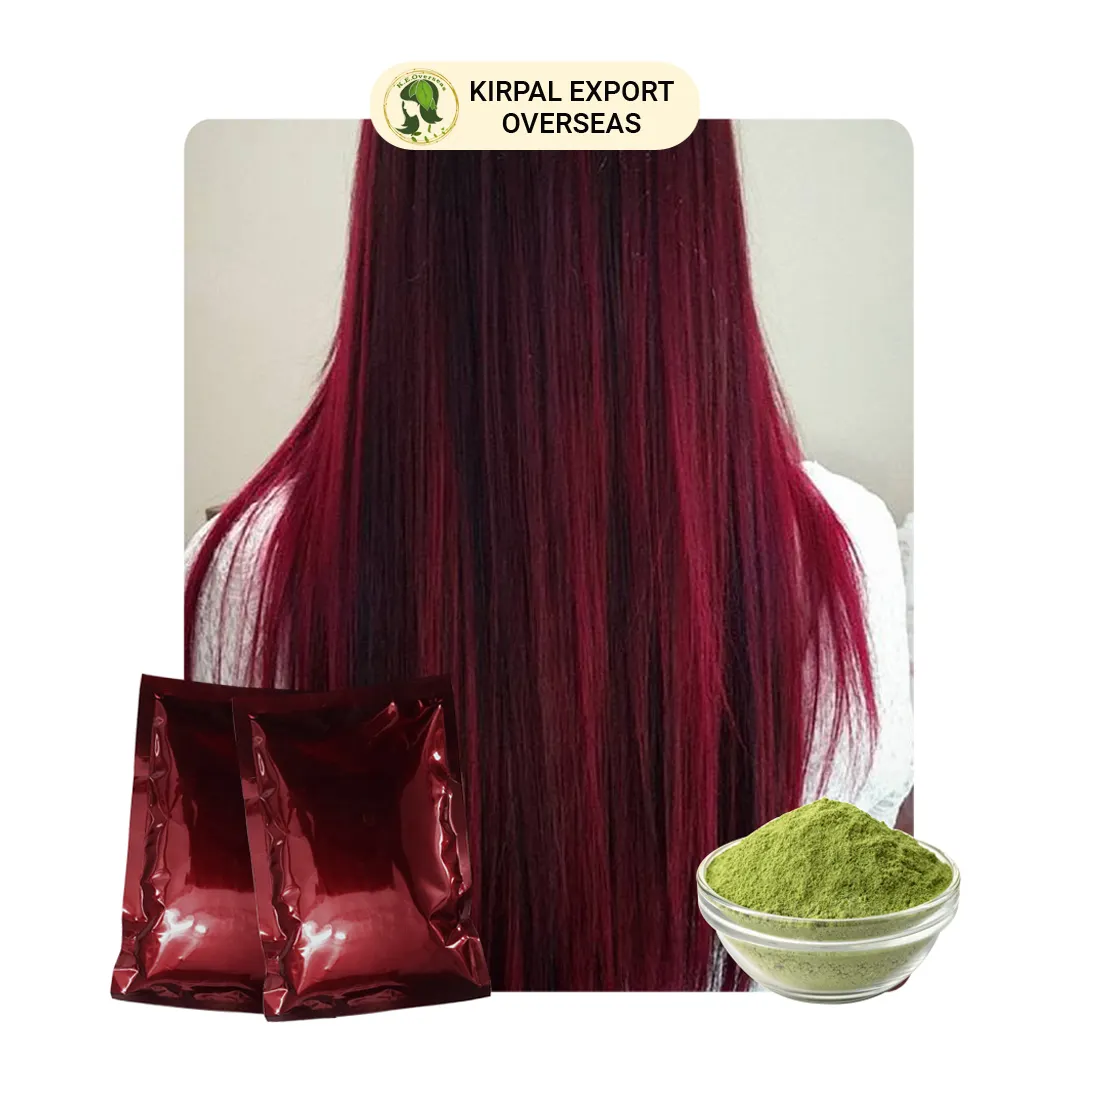 थोक बरगंडी बालों का रंग असली ट्रिपल परिष्कृत स्थानांतरित कर दिया भारतीय Sojat निर्माता निर्यातक थोक